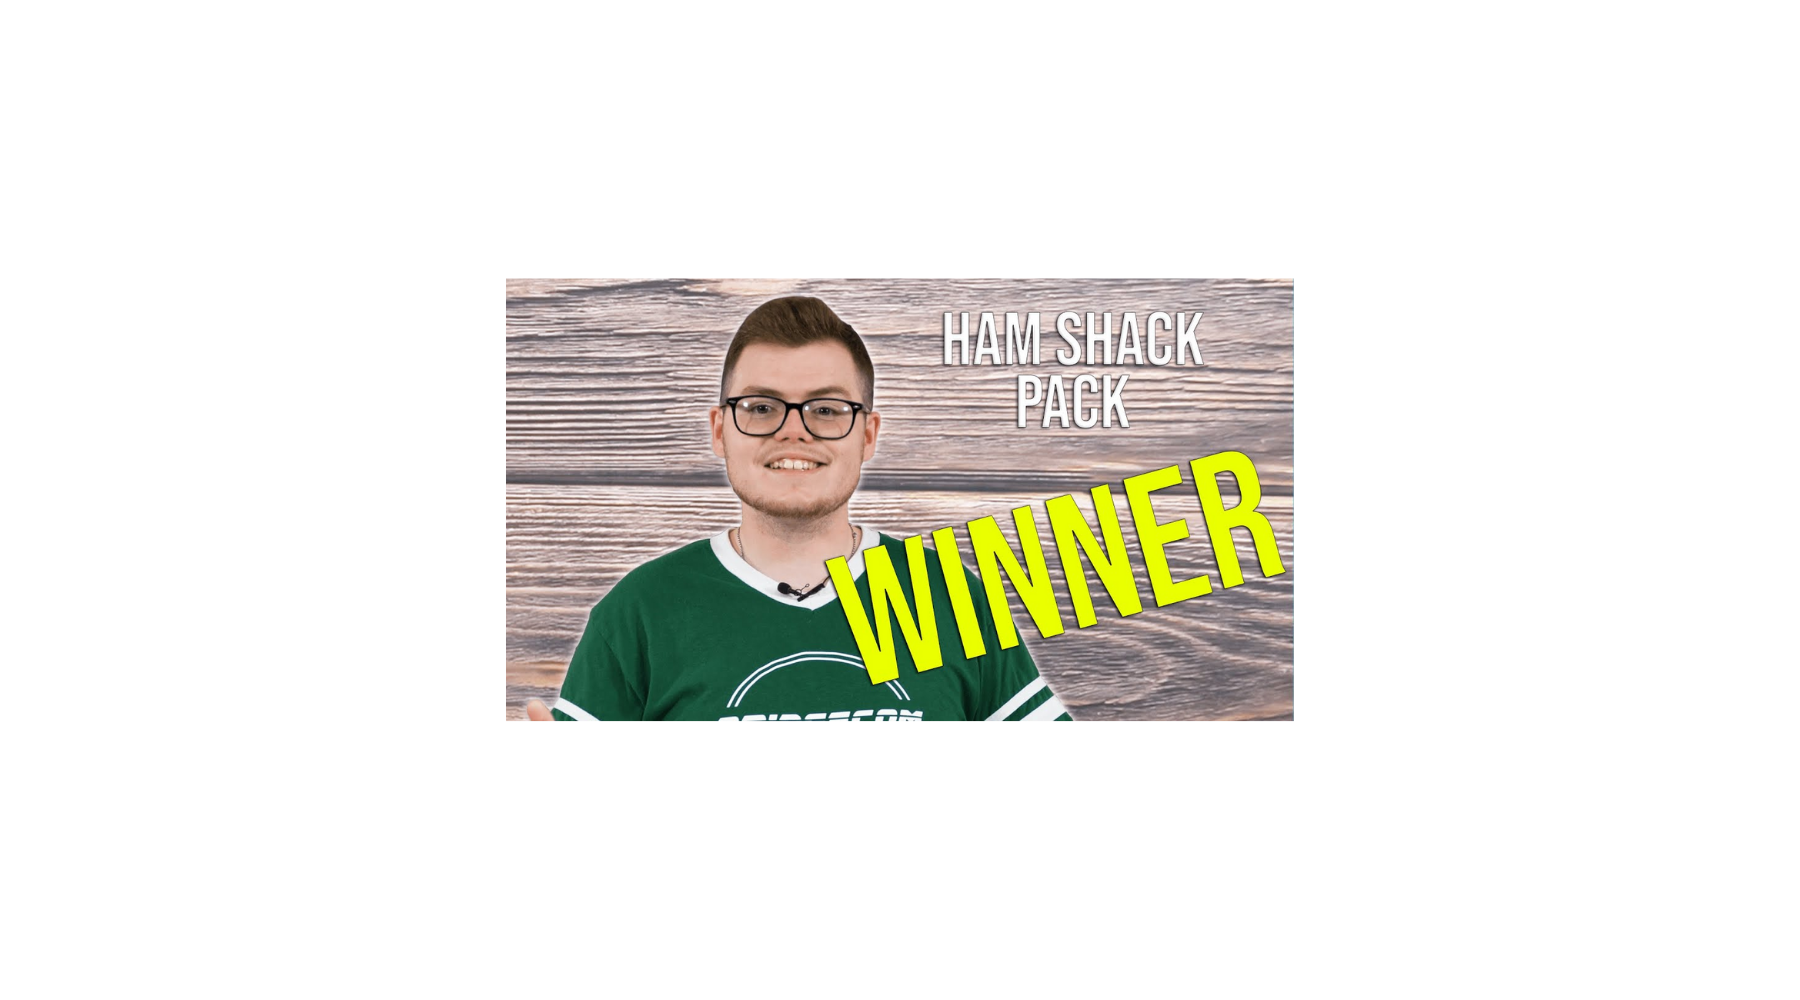 2020 Ham Shack Pack 2.0 Giveaway Winner Announcement